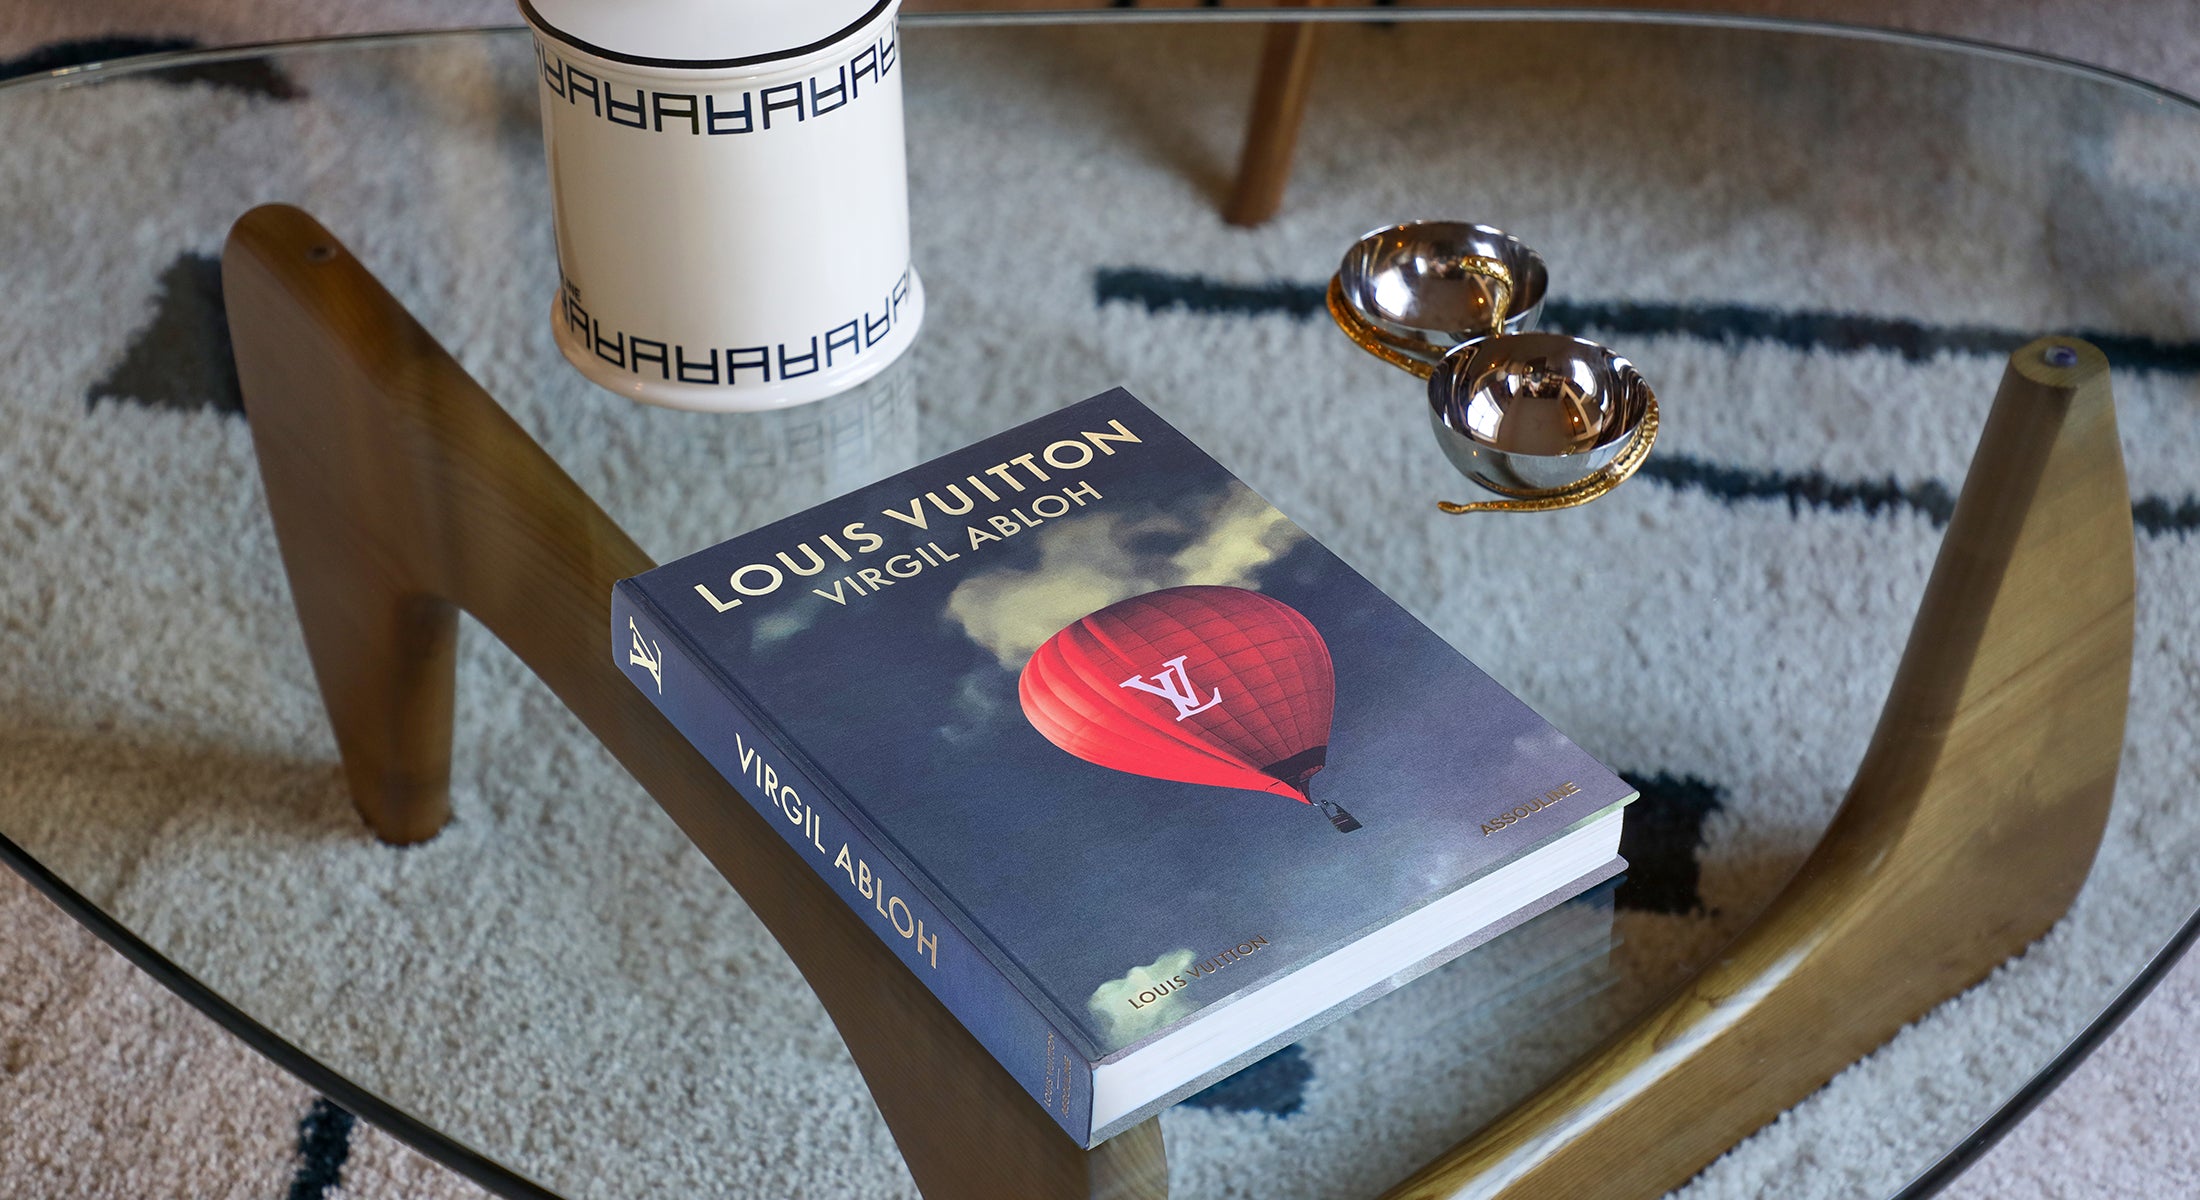 Assouline Louis Vuitton: Virgil Abloh (Classic Balloon Cover) Hardcover -  ASSOULINE